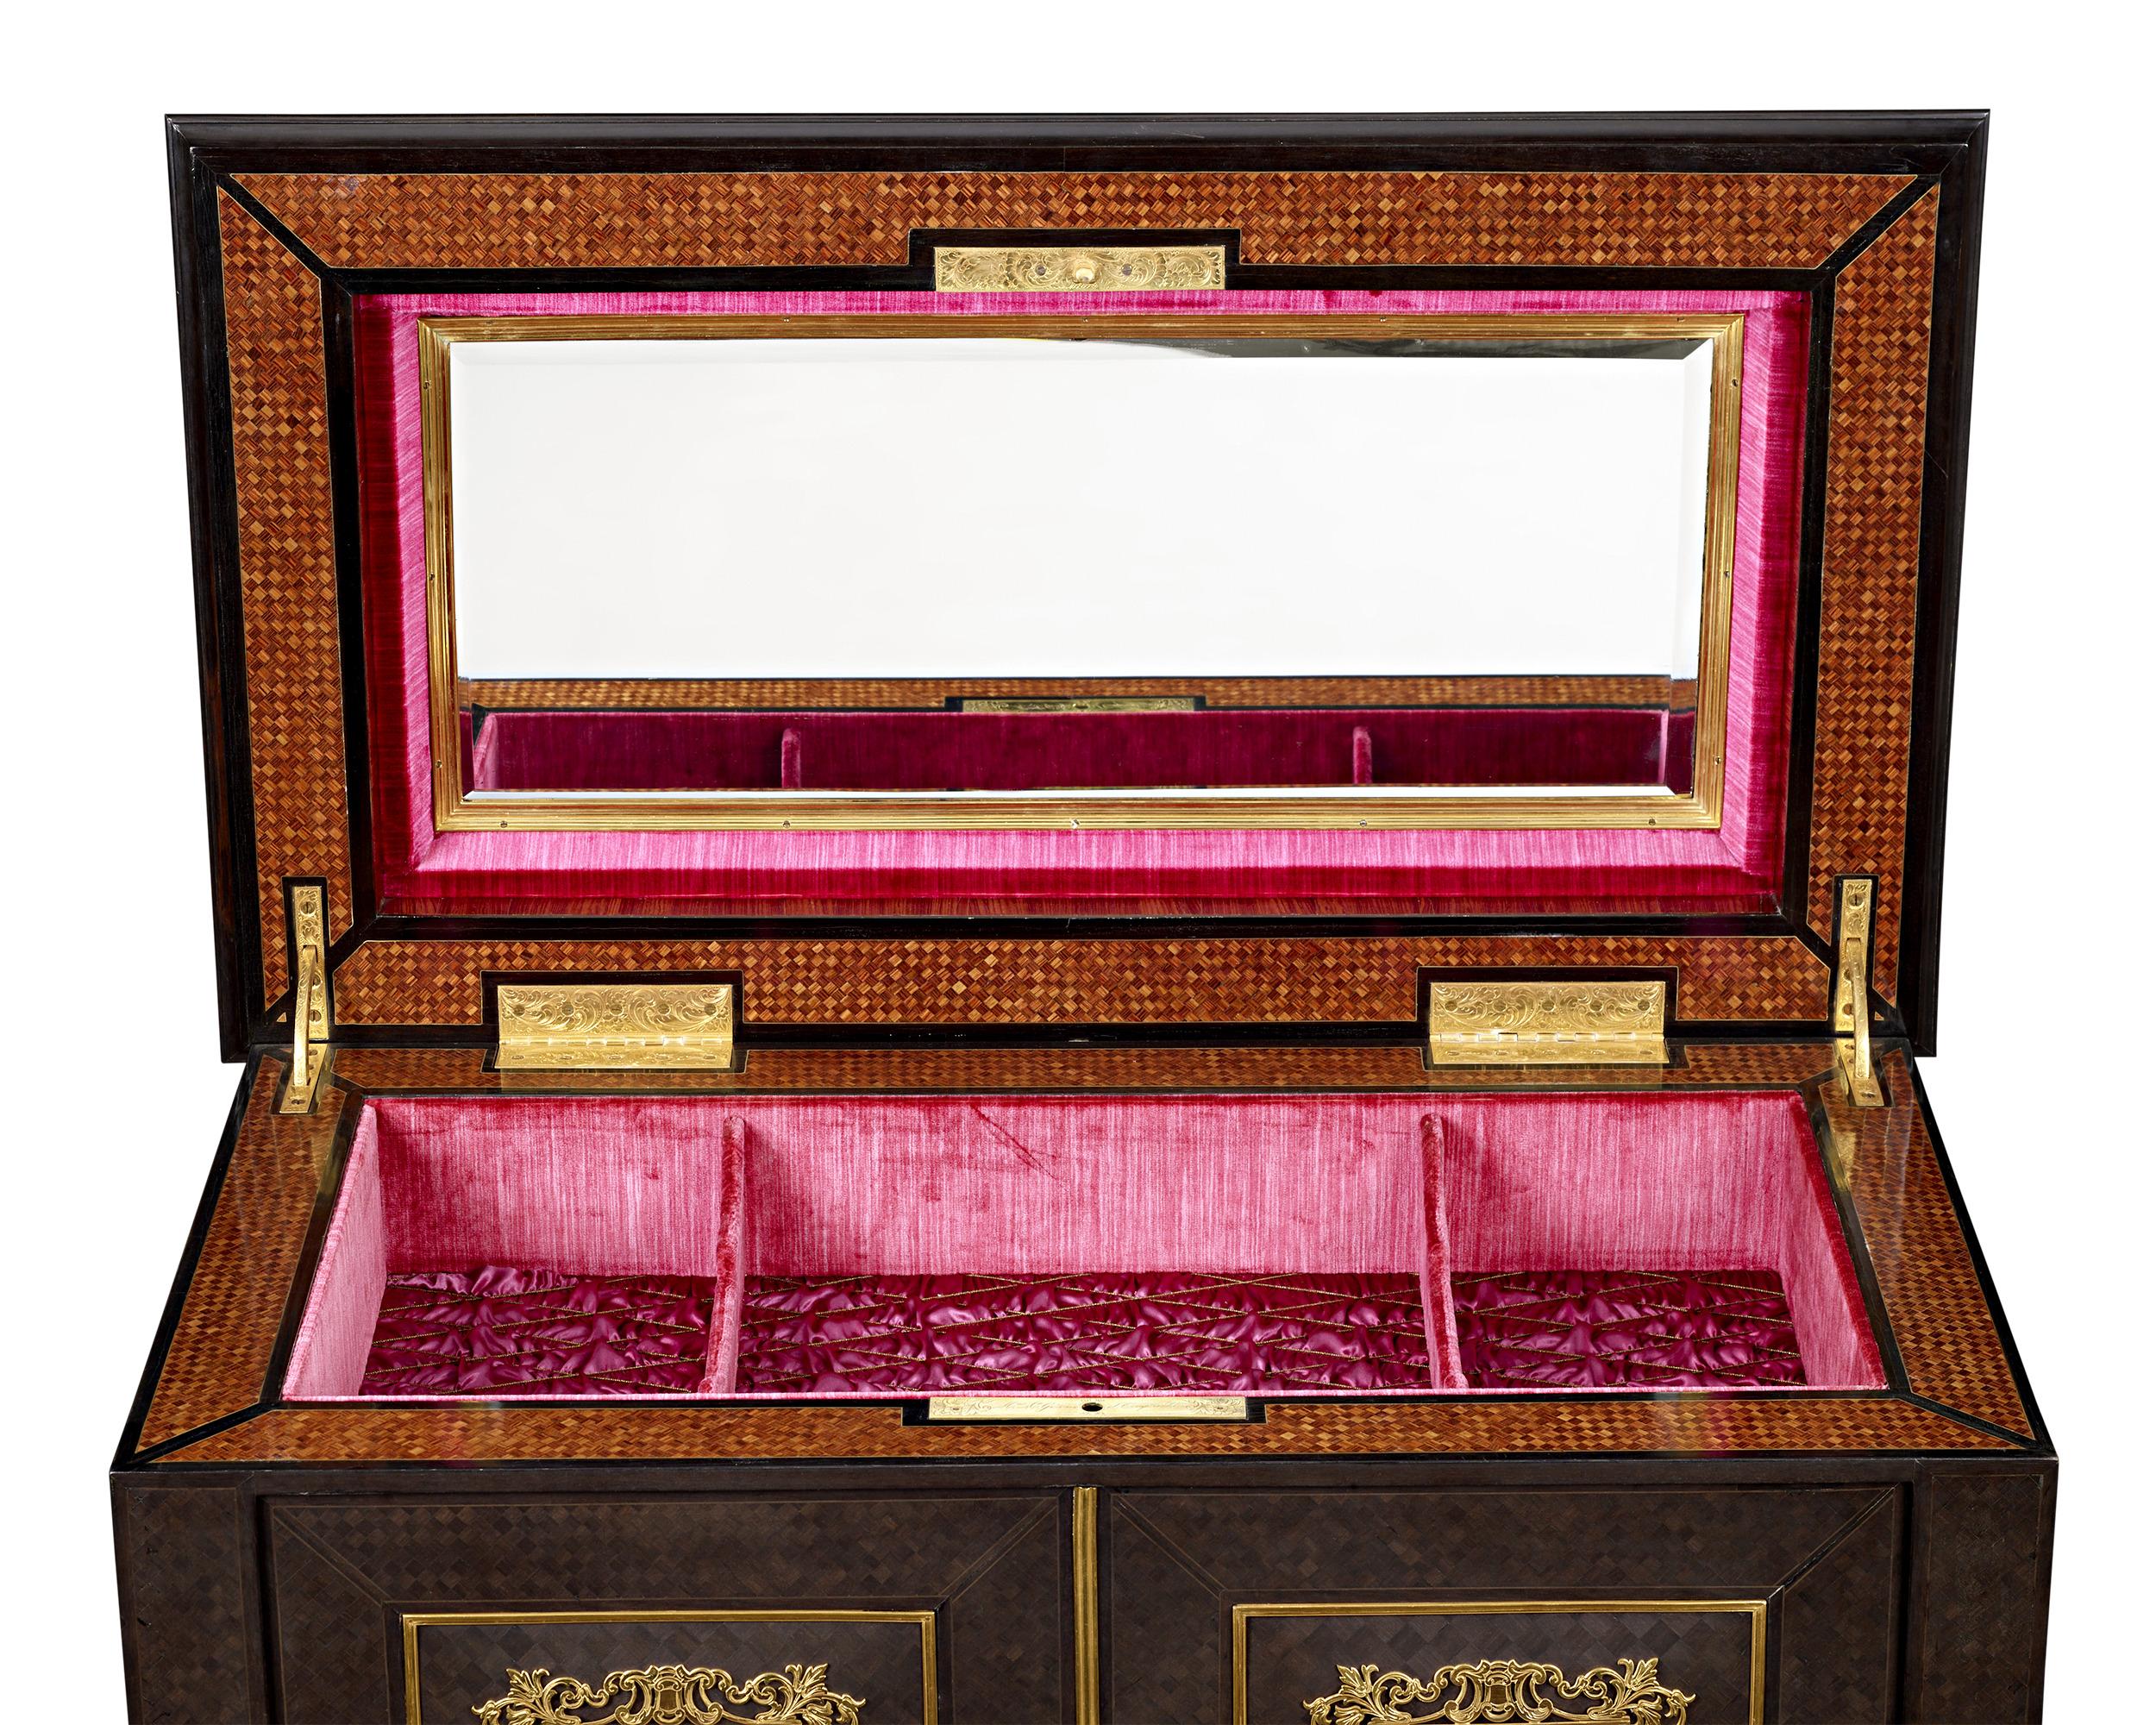 19th Century Second Empire Ormolu and Ebony Jewelry Cabinet by Giroux